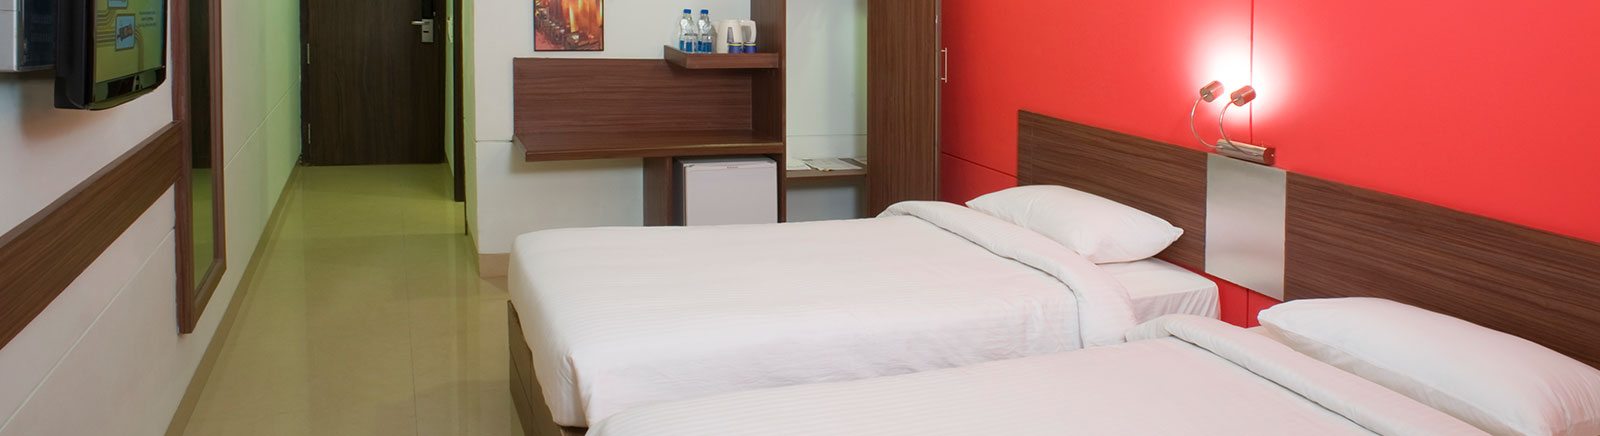 room-of-ginger-bangalore-irr-hotel